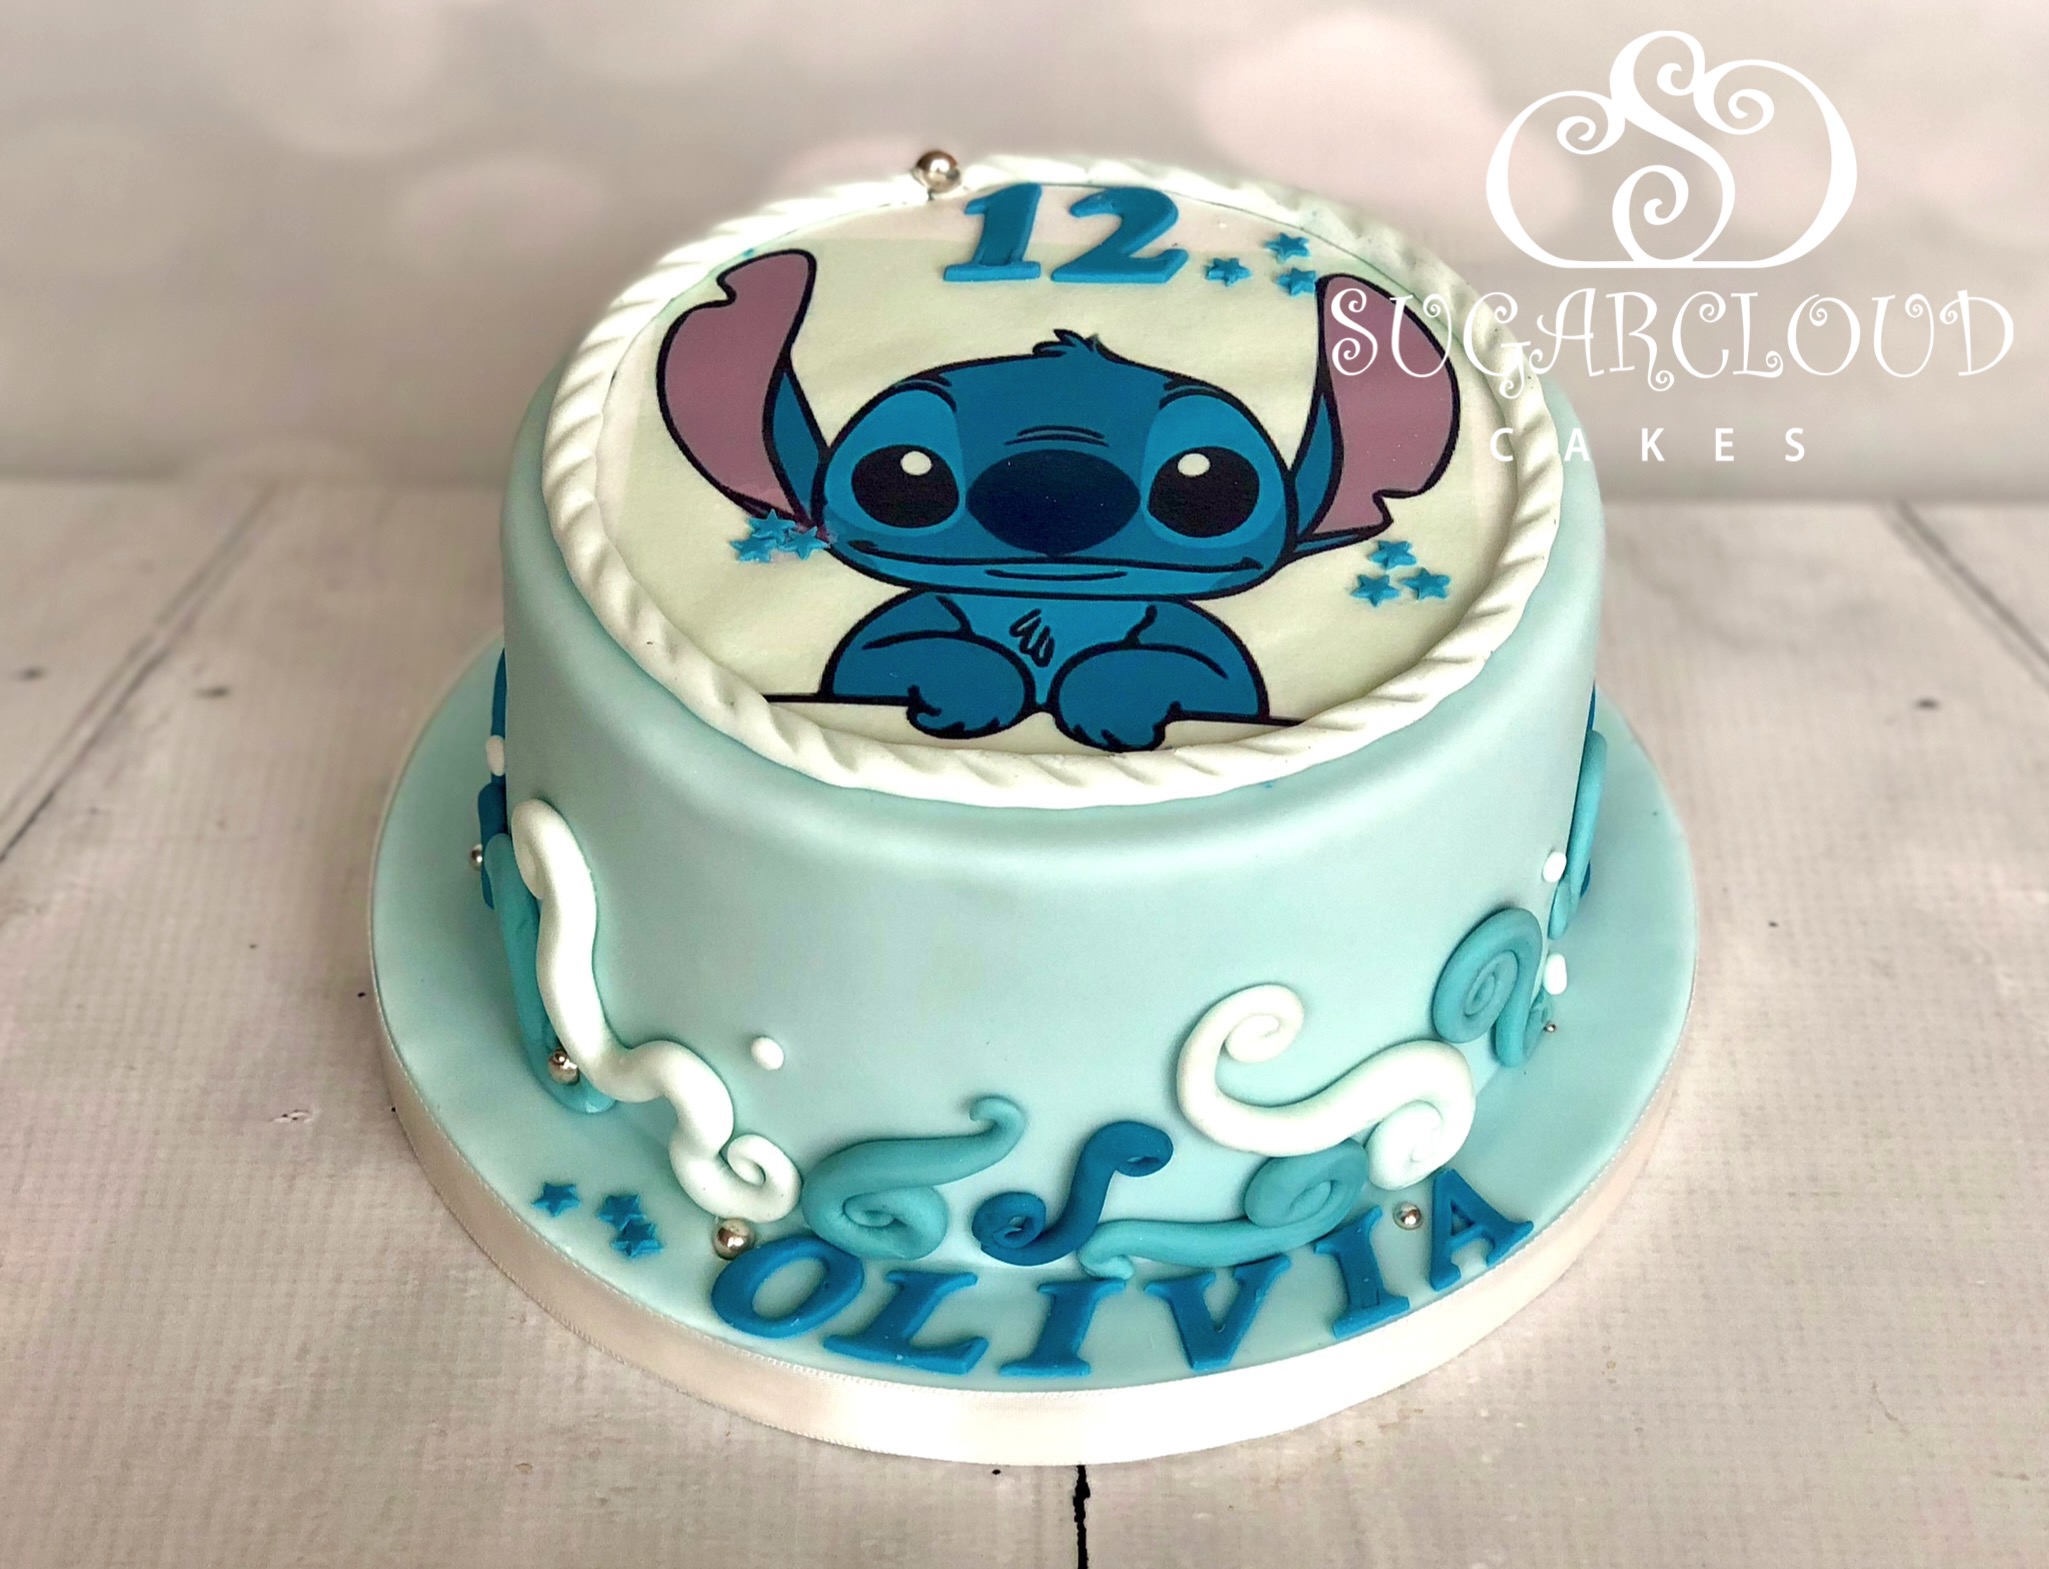 A Stitch Themed 12th Birthday Cake for Olivia, Nantwich